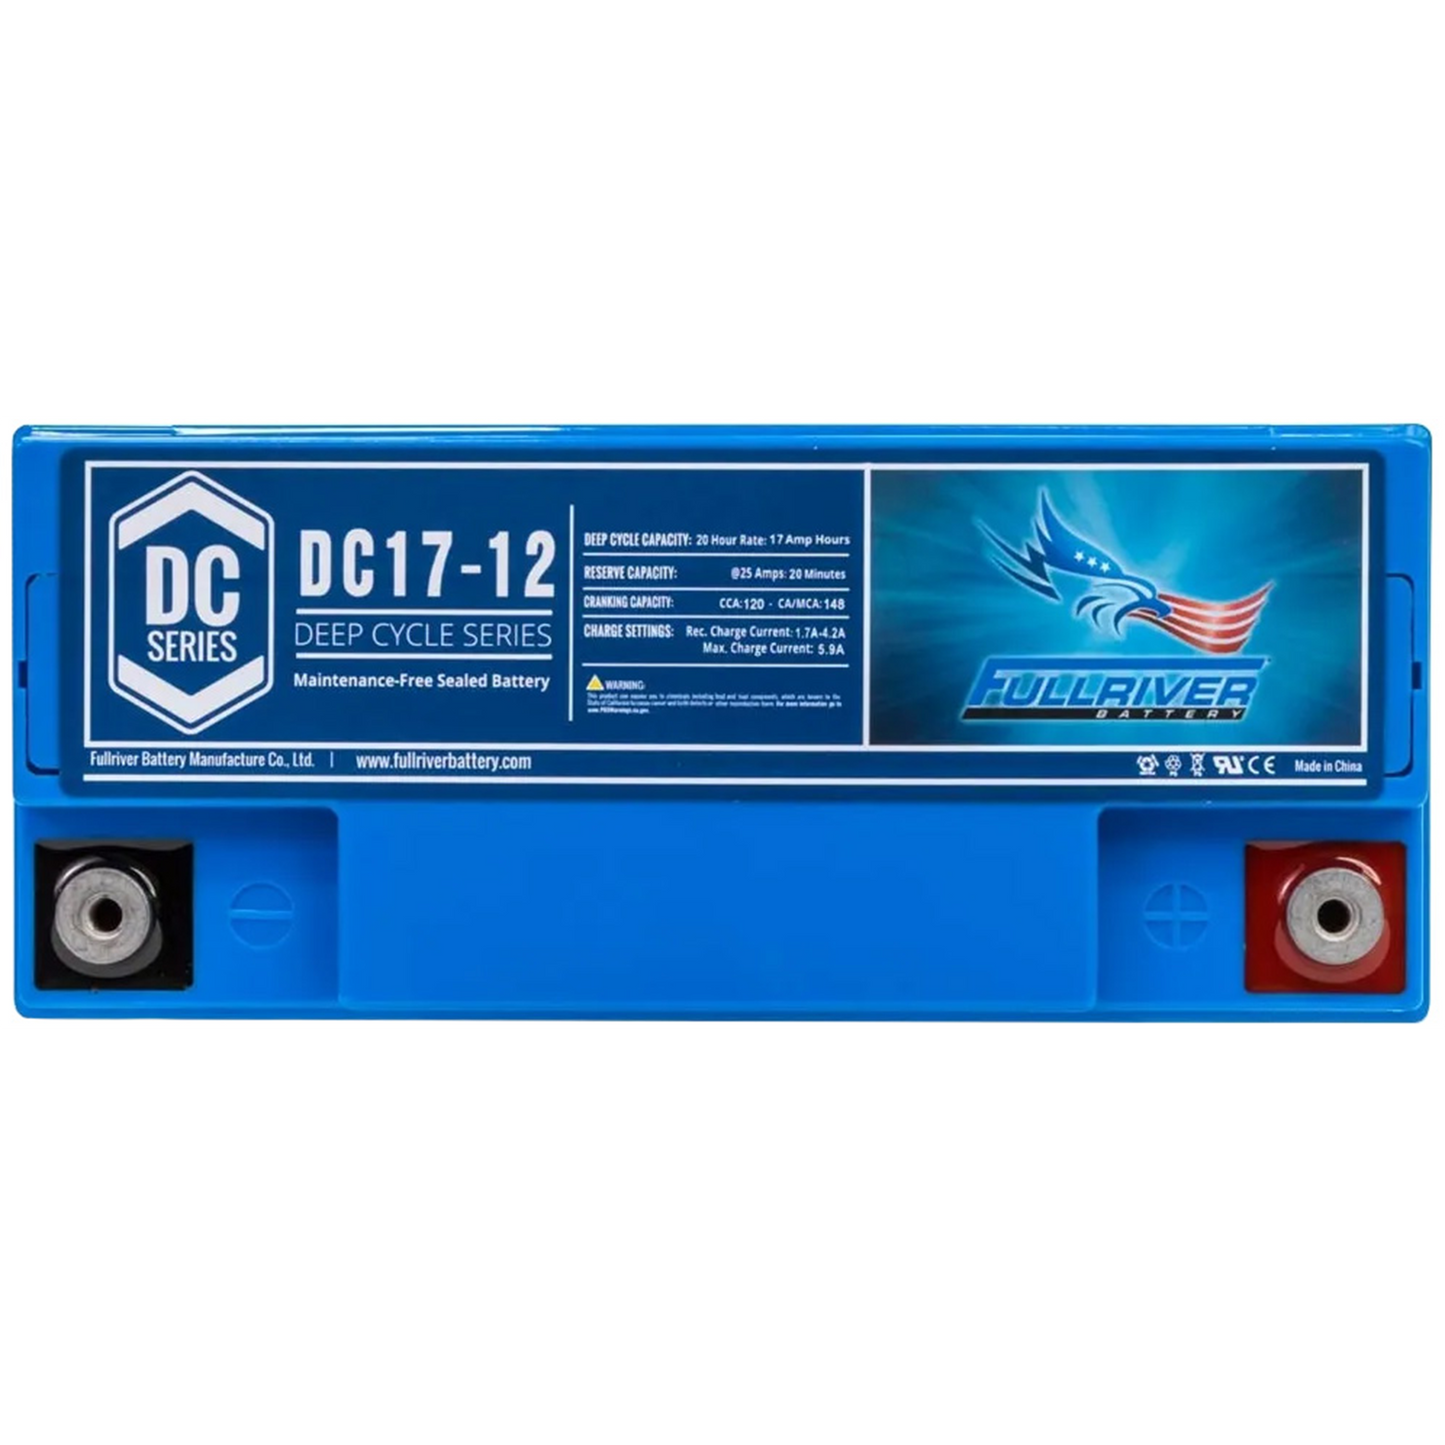 DC Series Battery 12V 17Ah (DC17-12)